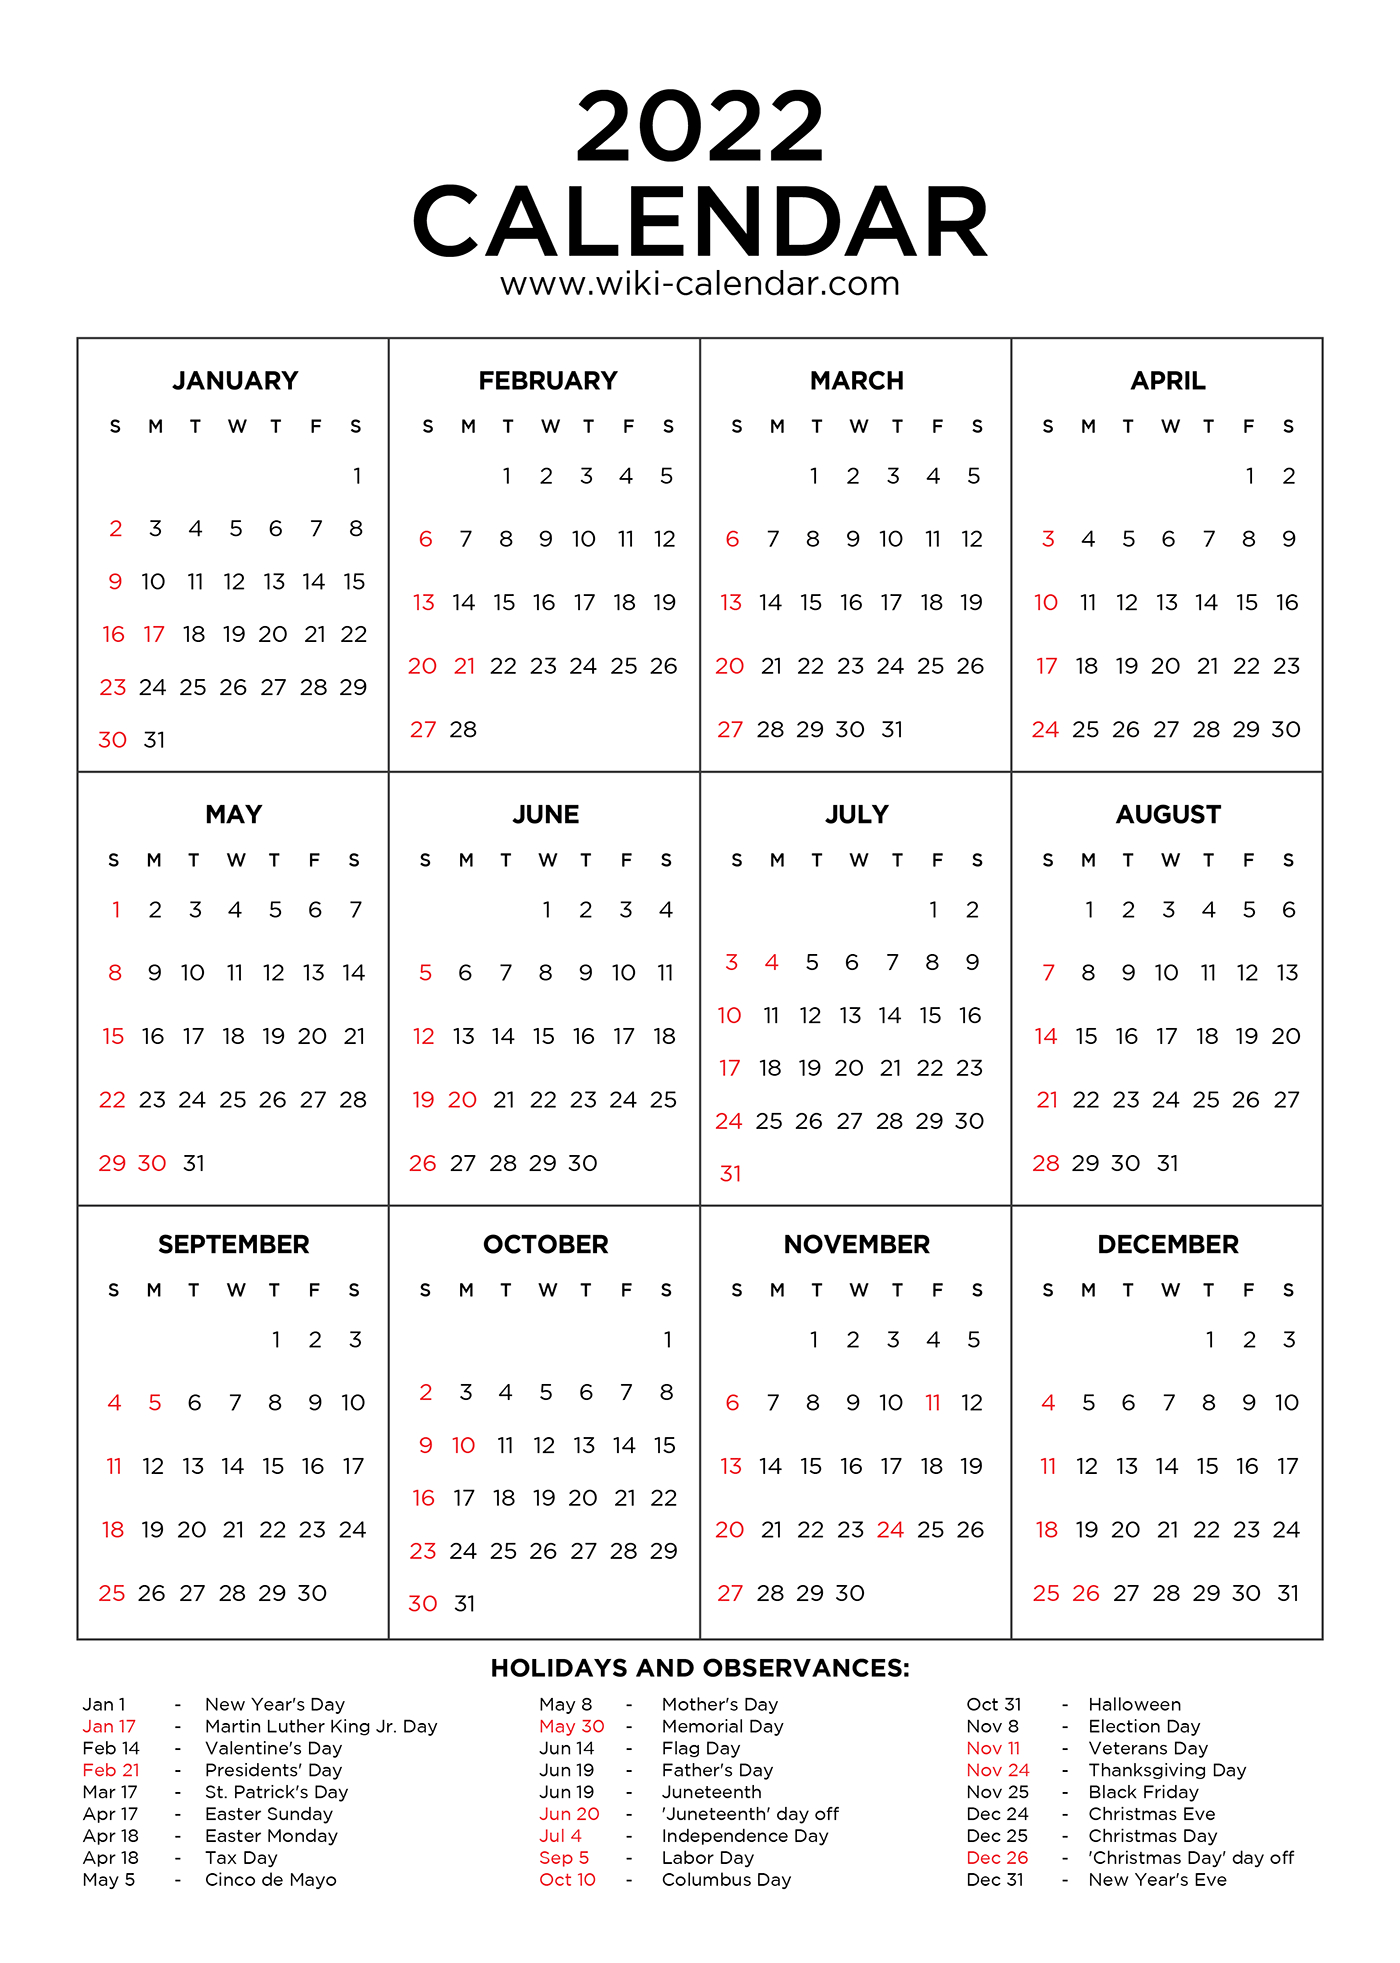 Year 2022 Calendar Printable With Holidays - Wiki Calendar-2022 Printable Calendar One Page